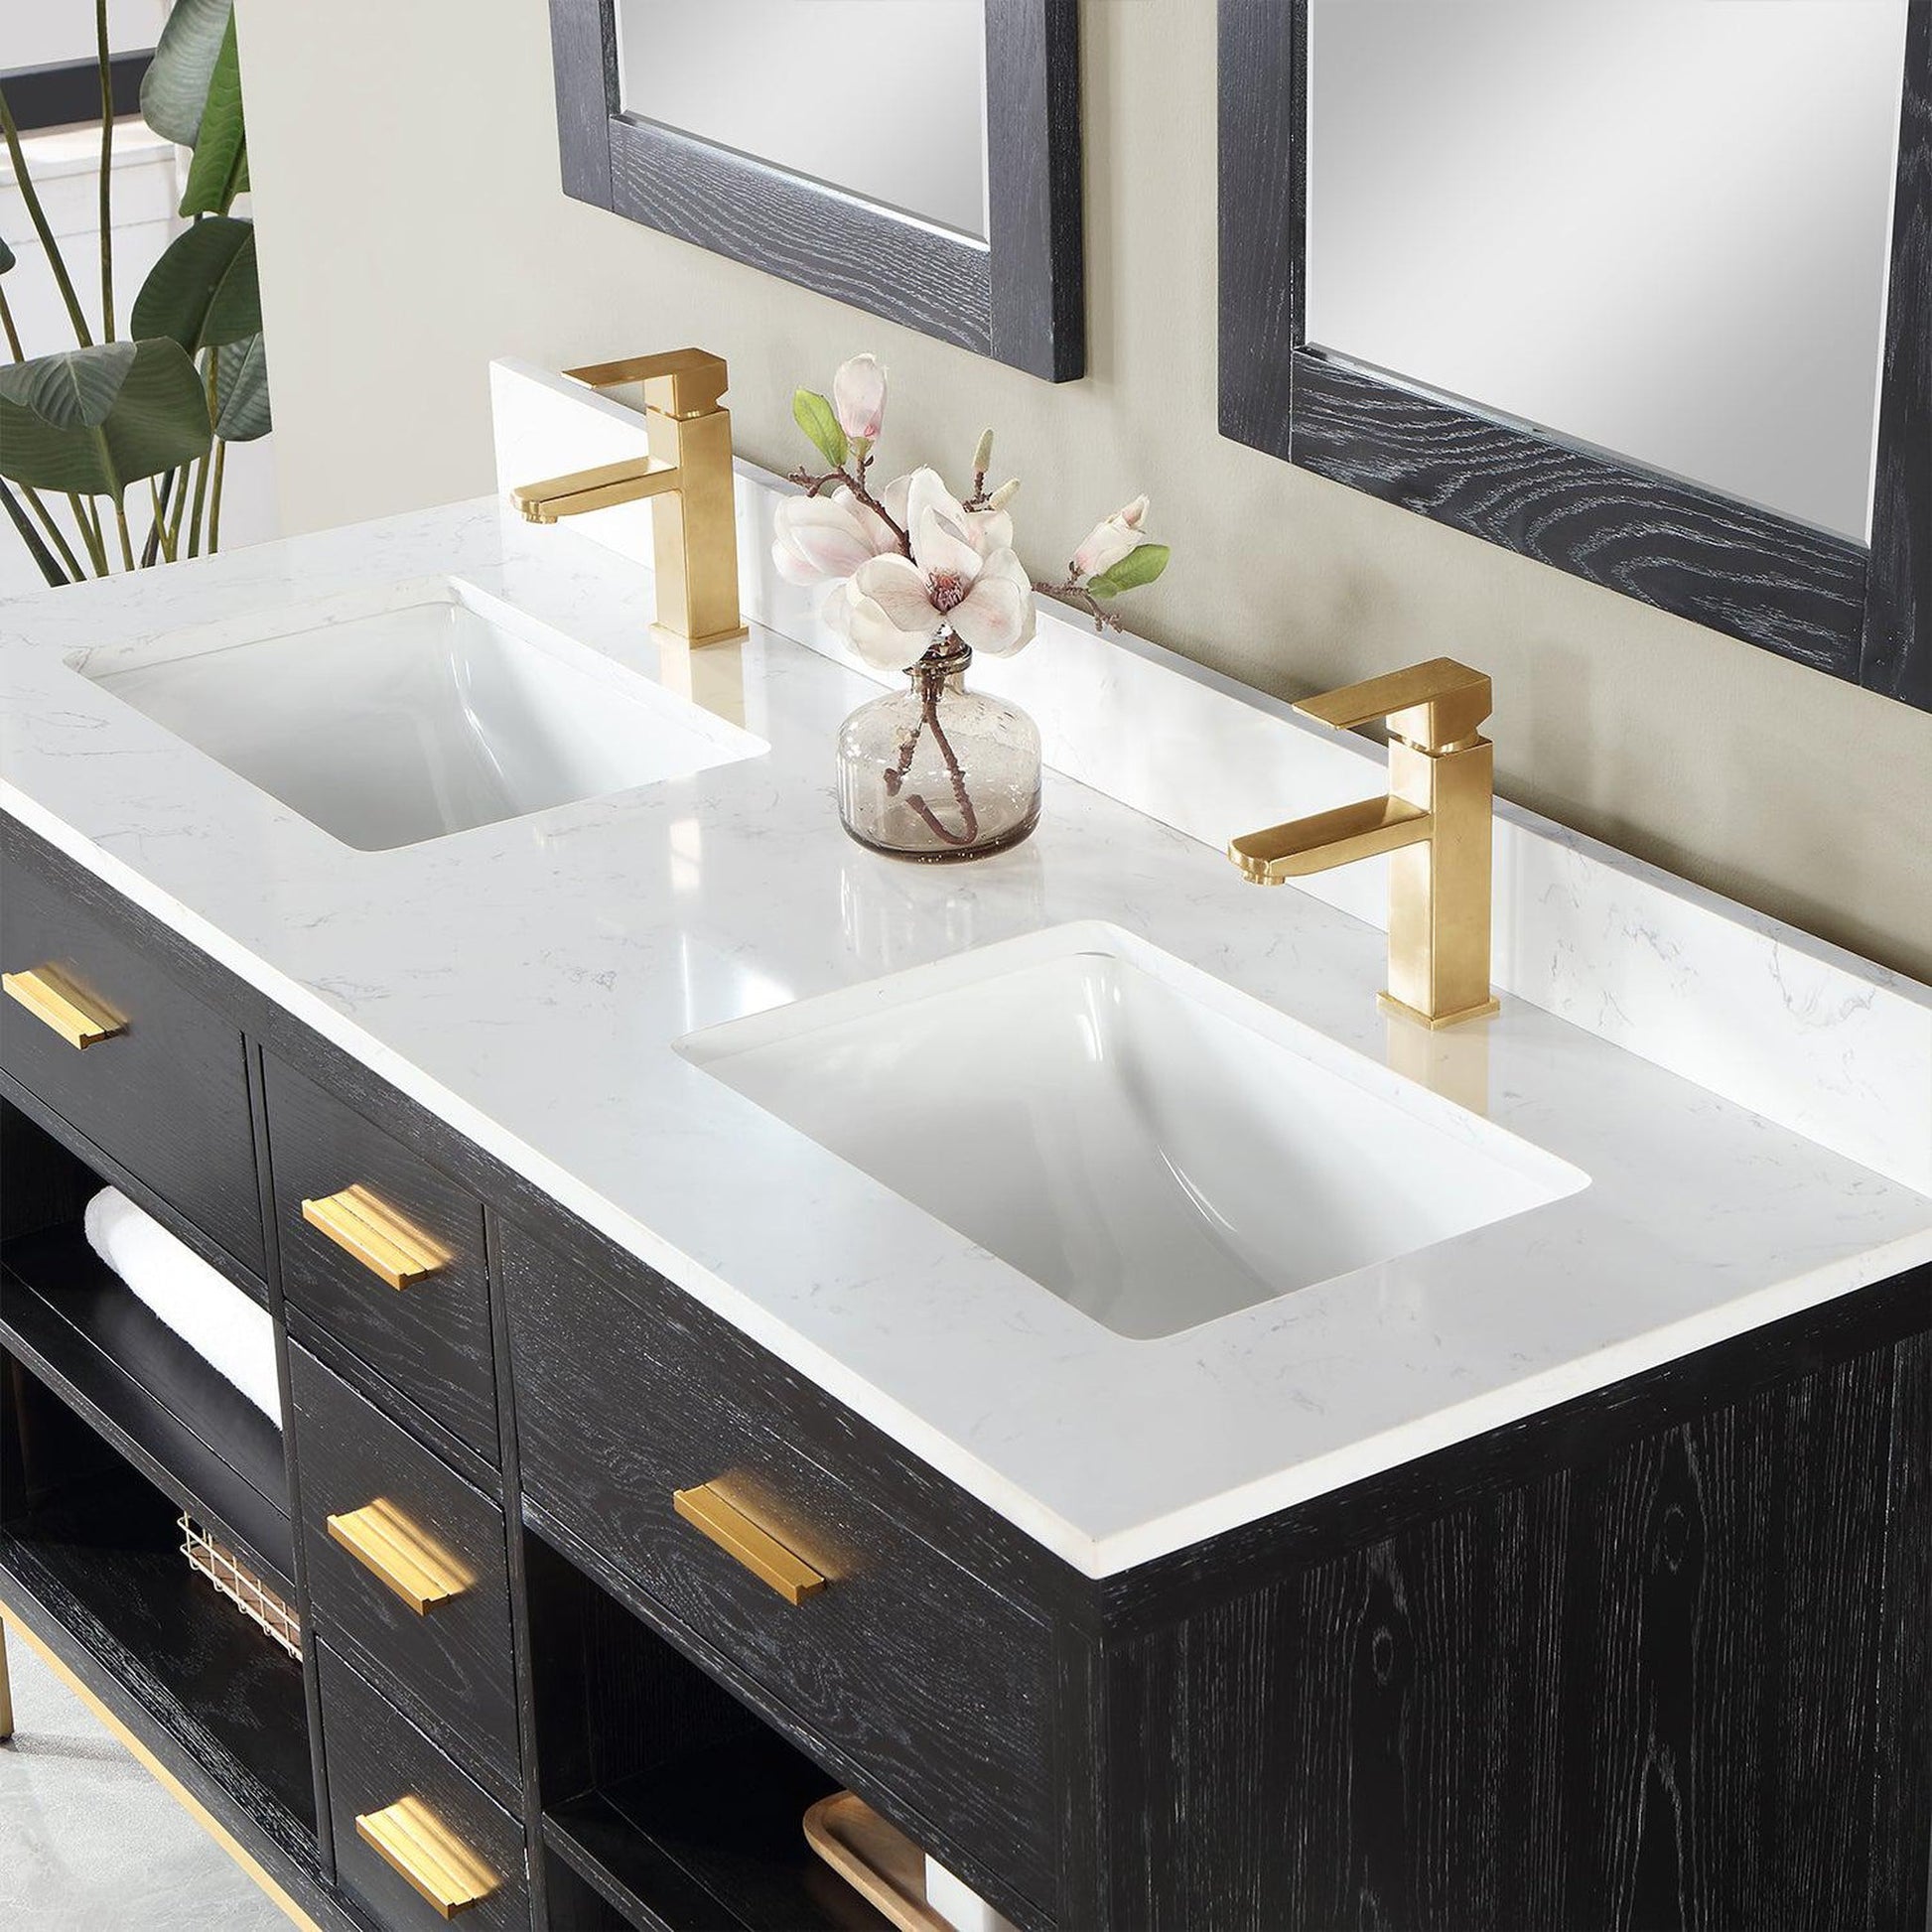 Altair Kesia 60" Black Oak Freestanding Double Bathroom Vanity Set With Mirror, Stylish Aosta White Composite Stone Top, Two Rectangular Undermount Ceramic Sinks, Overflow, and Backsplash